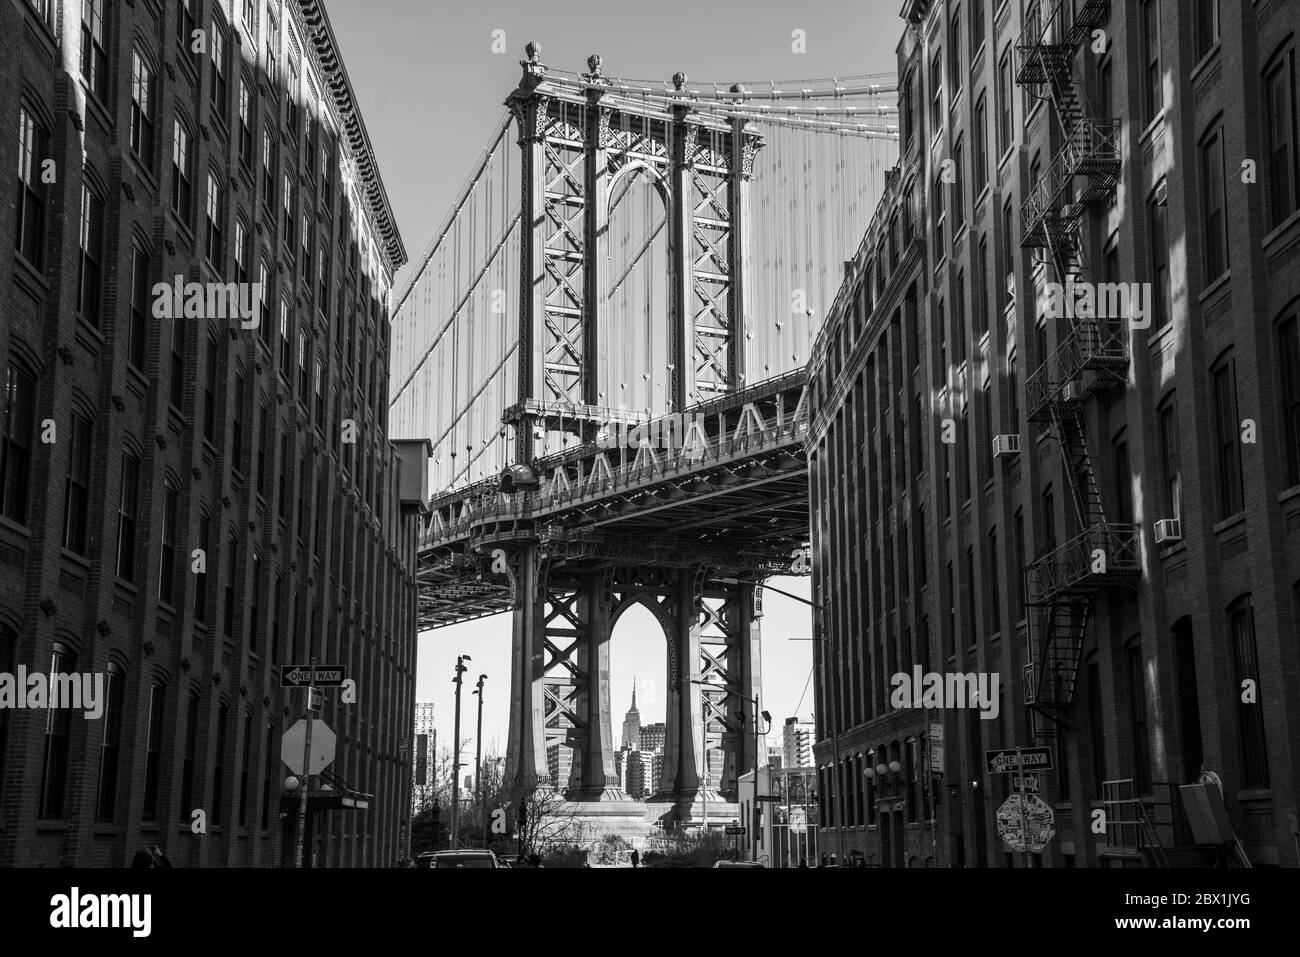 View from Main Street to Manhattan Bridge and Empire State Building, Dumbo, Brooklyn, New York, USA Stock Photo